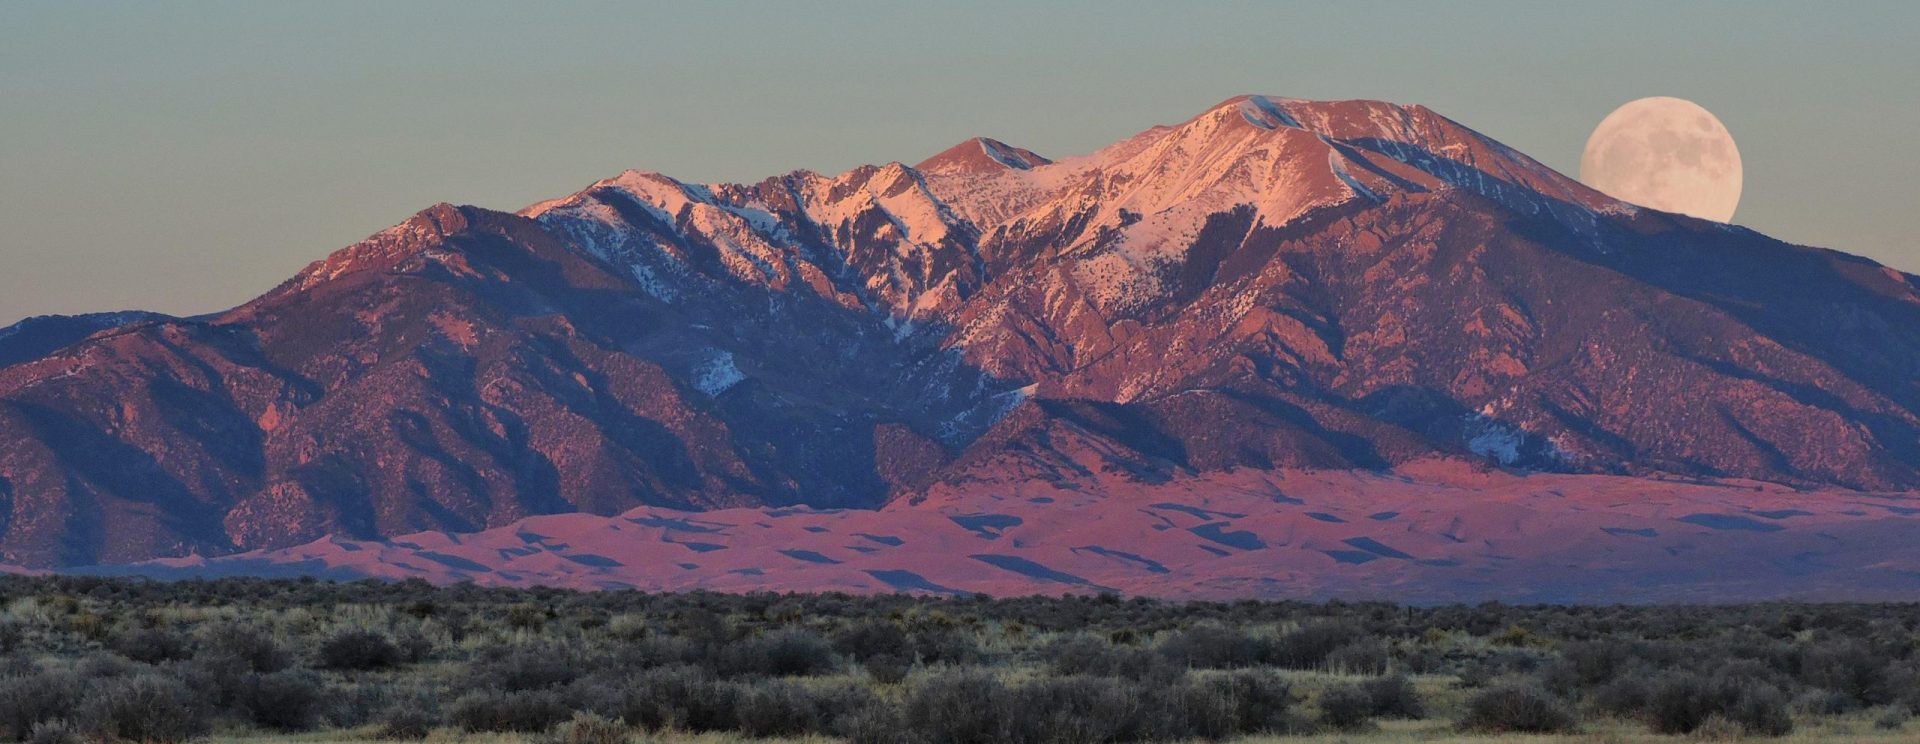 interior Great Basin National Park banner image